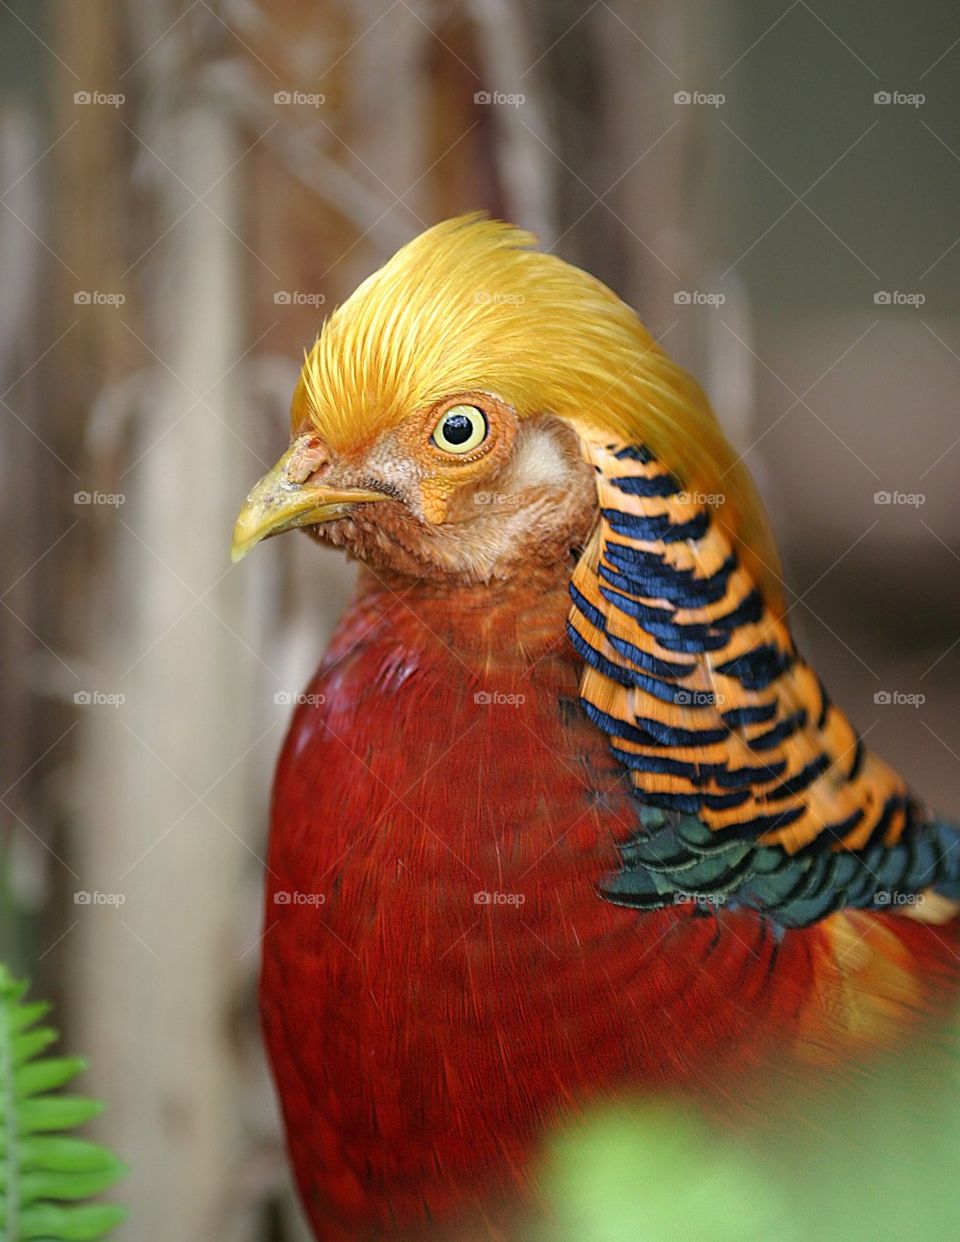 Golden Pheasant 